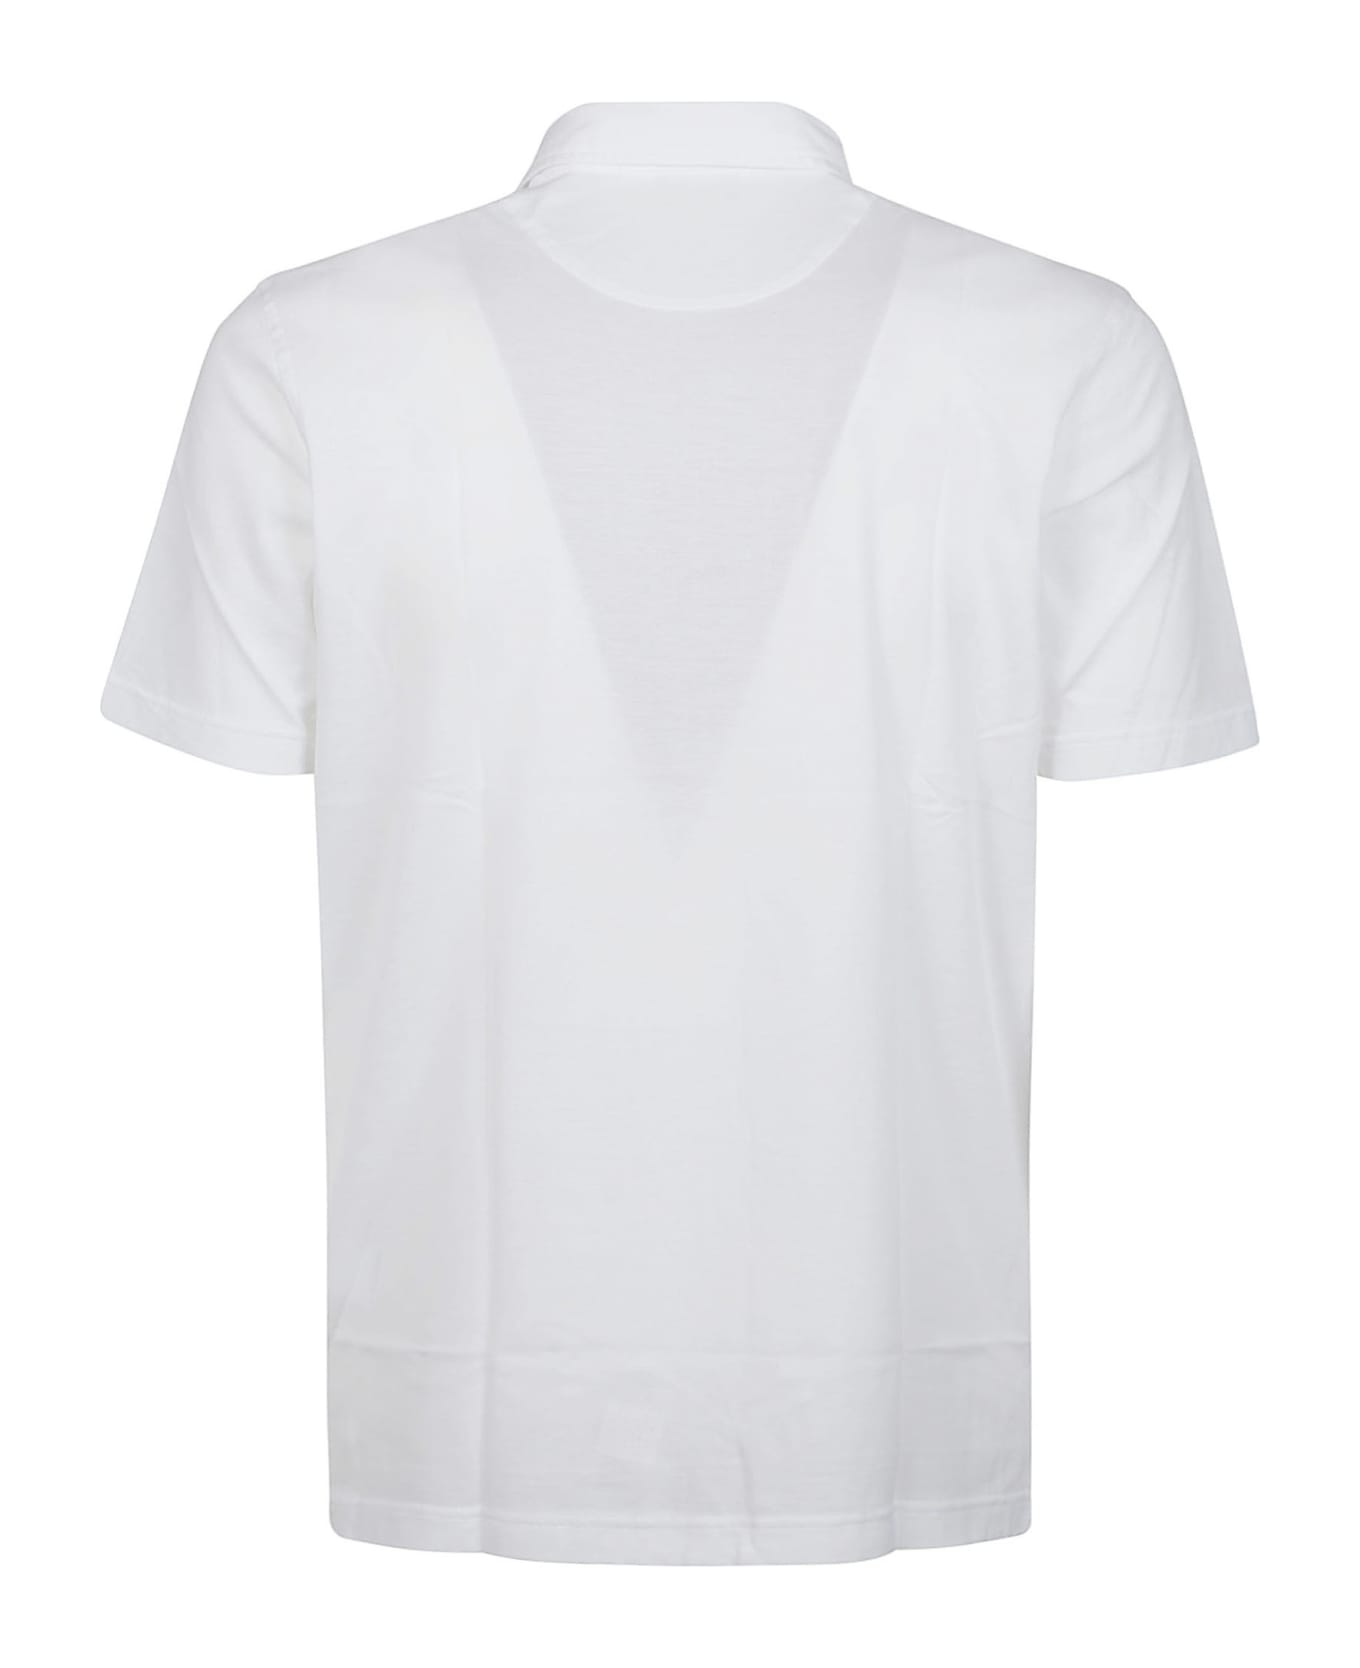 Barba Napoli Short Sleeve Polo Shirt - Bianco ポロシャツ